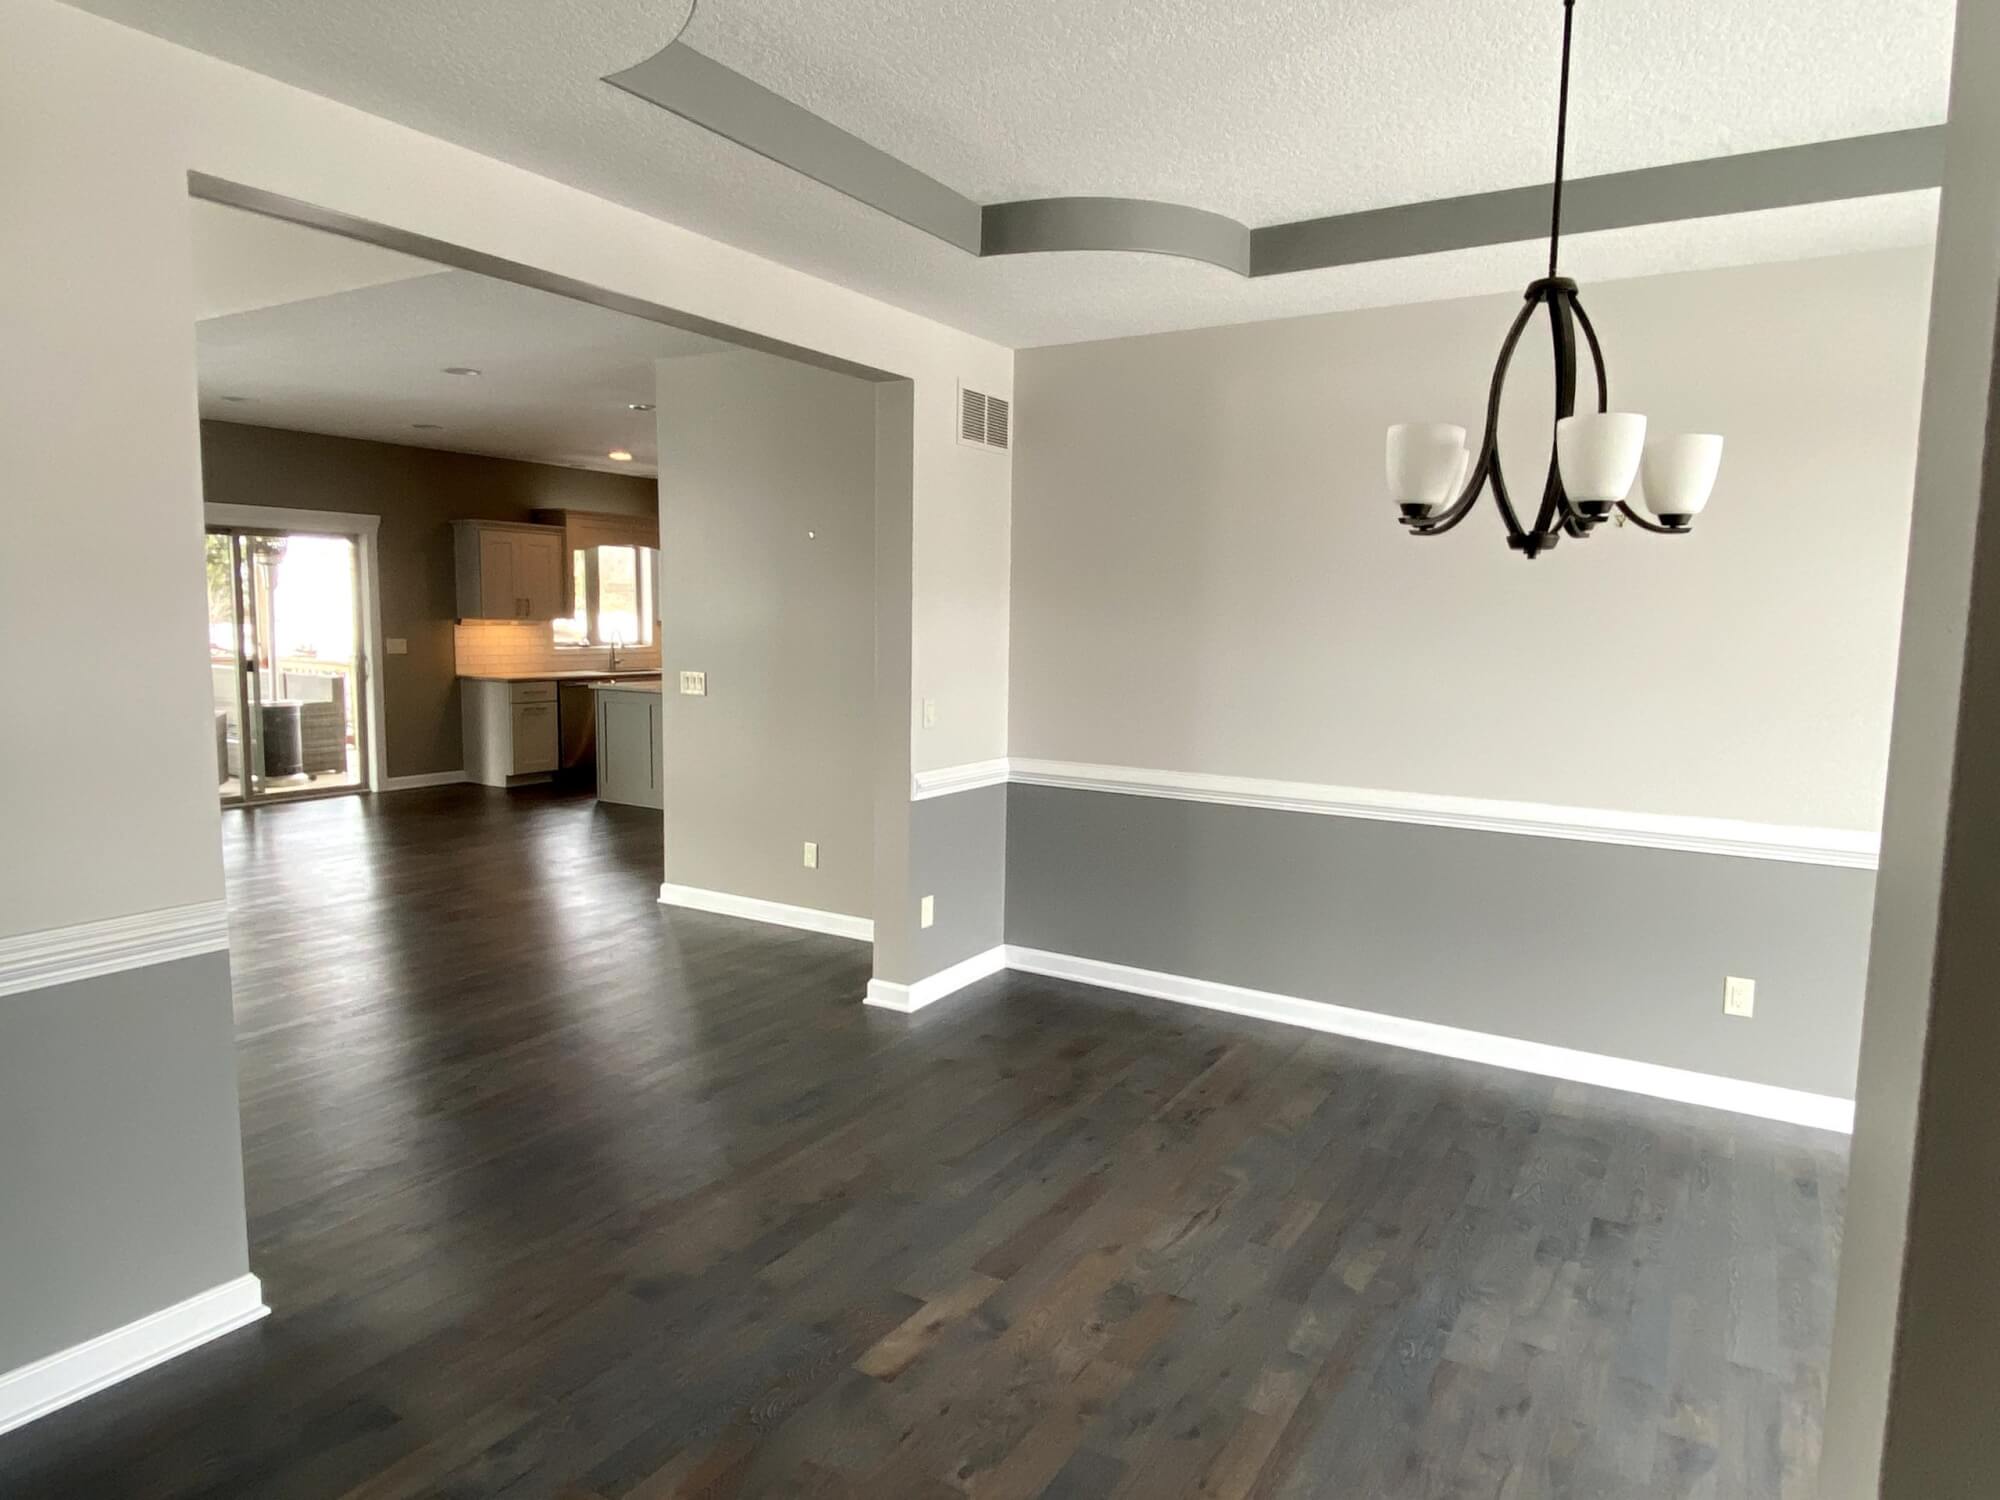 Refinish Your Hardwood Floors, Hardwood Floors With Gray Walls